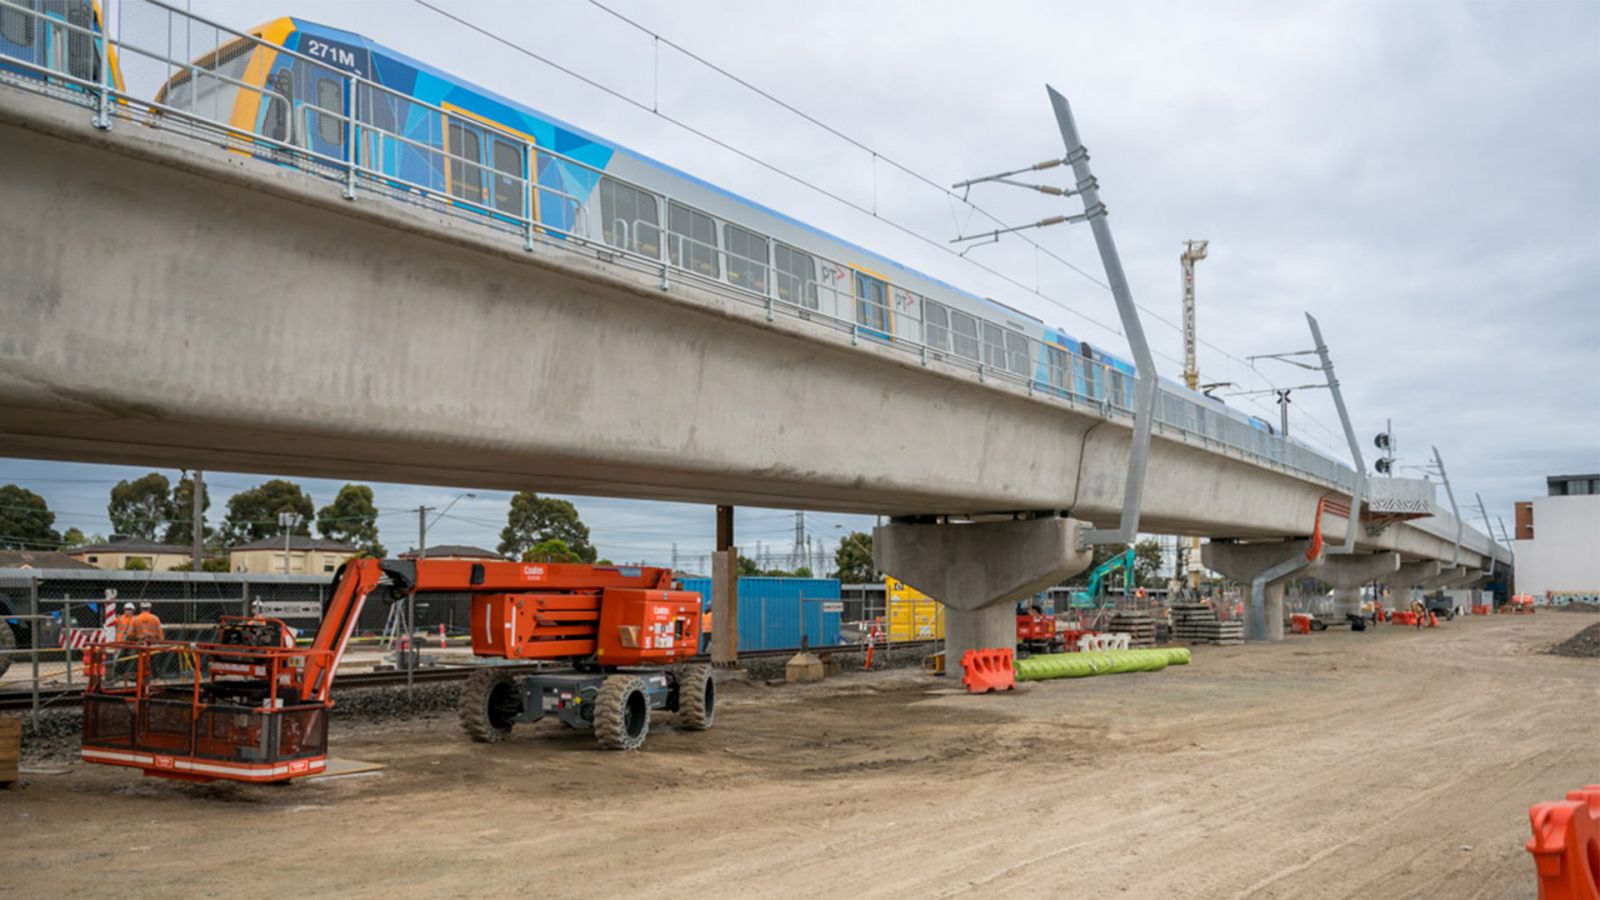 A train travels over a train bridge while construction continues underneath.